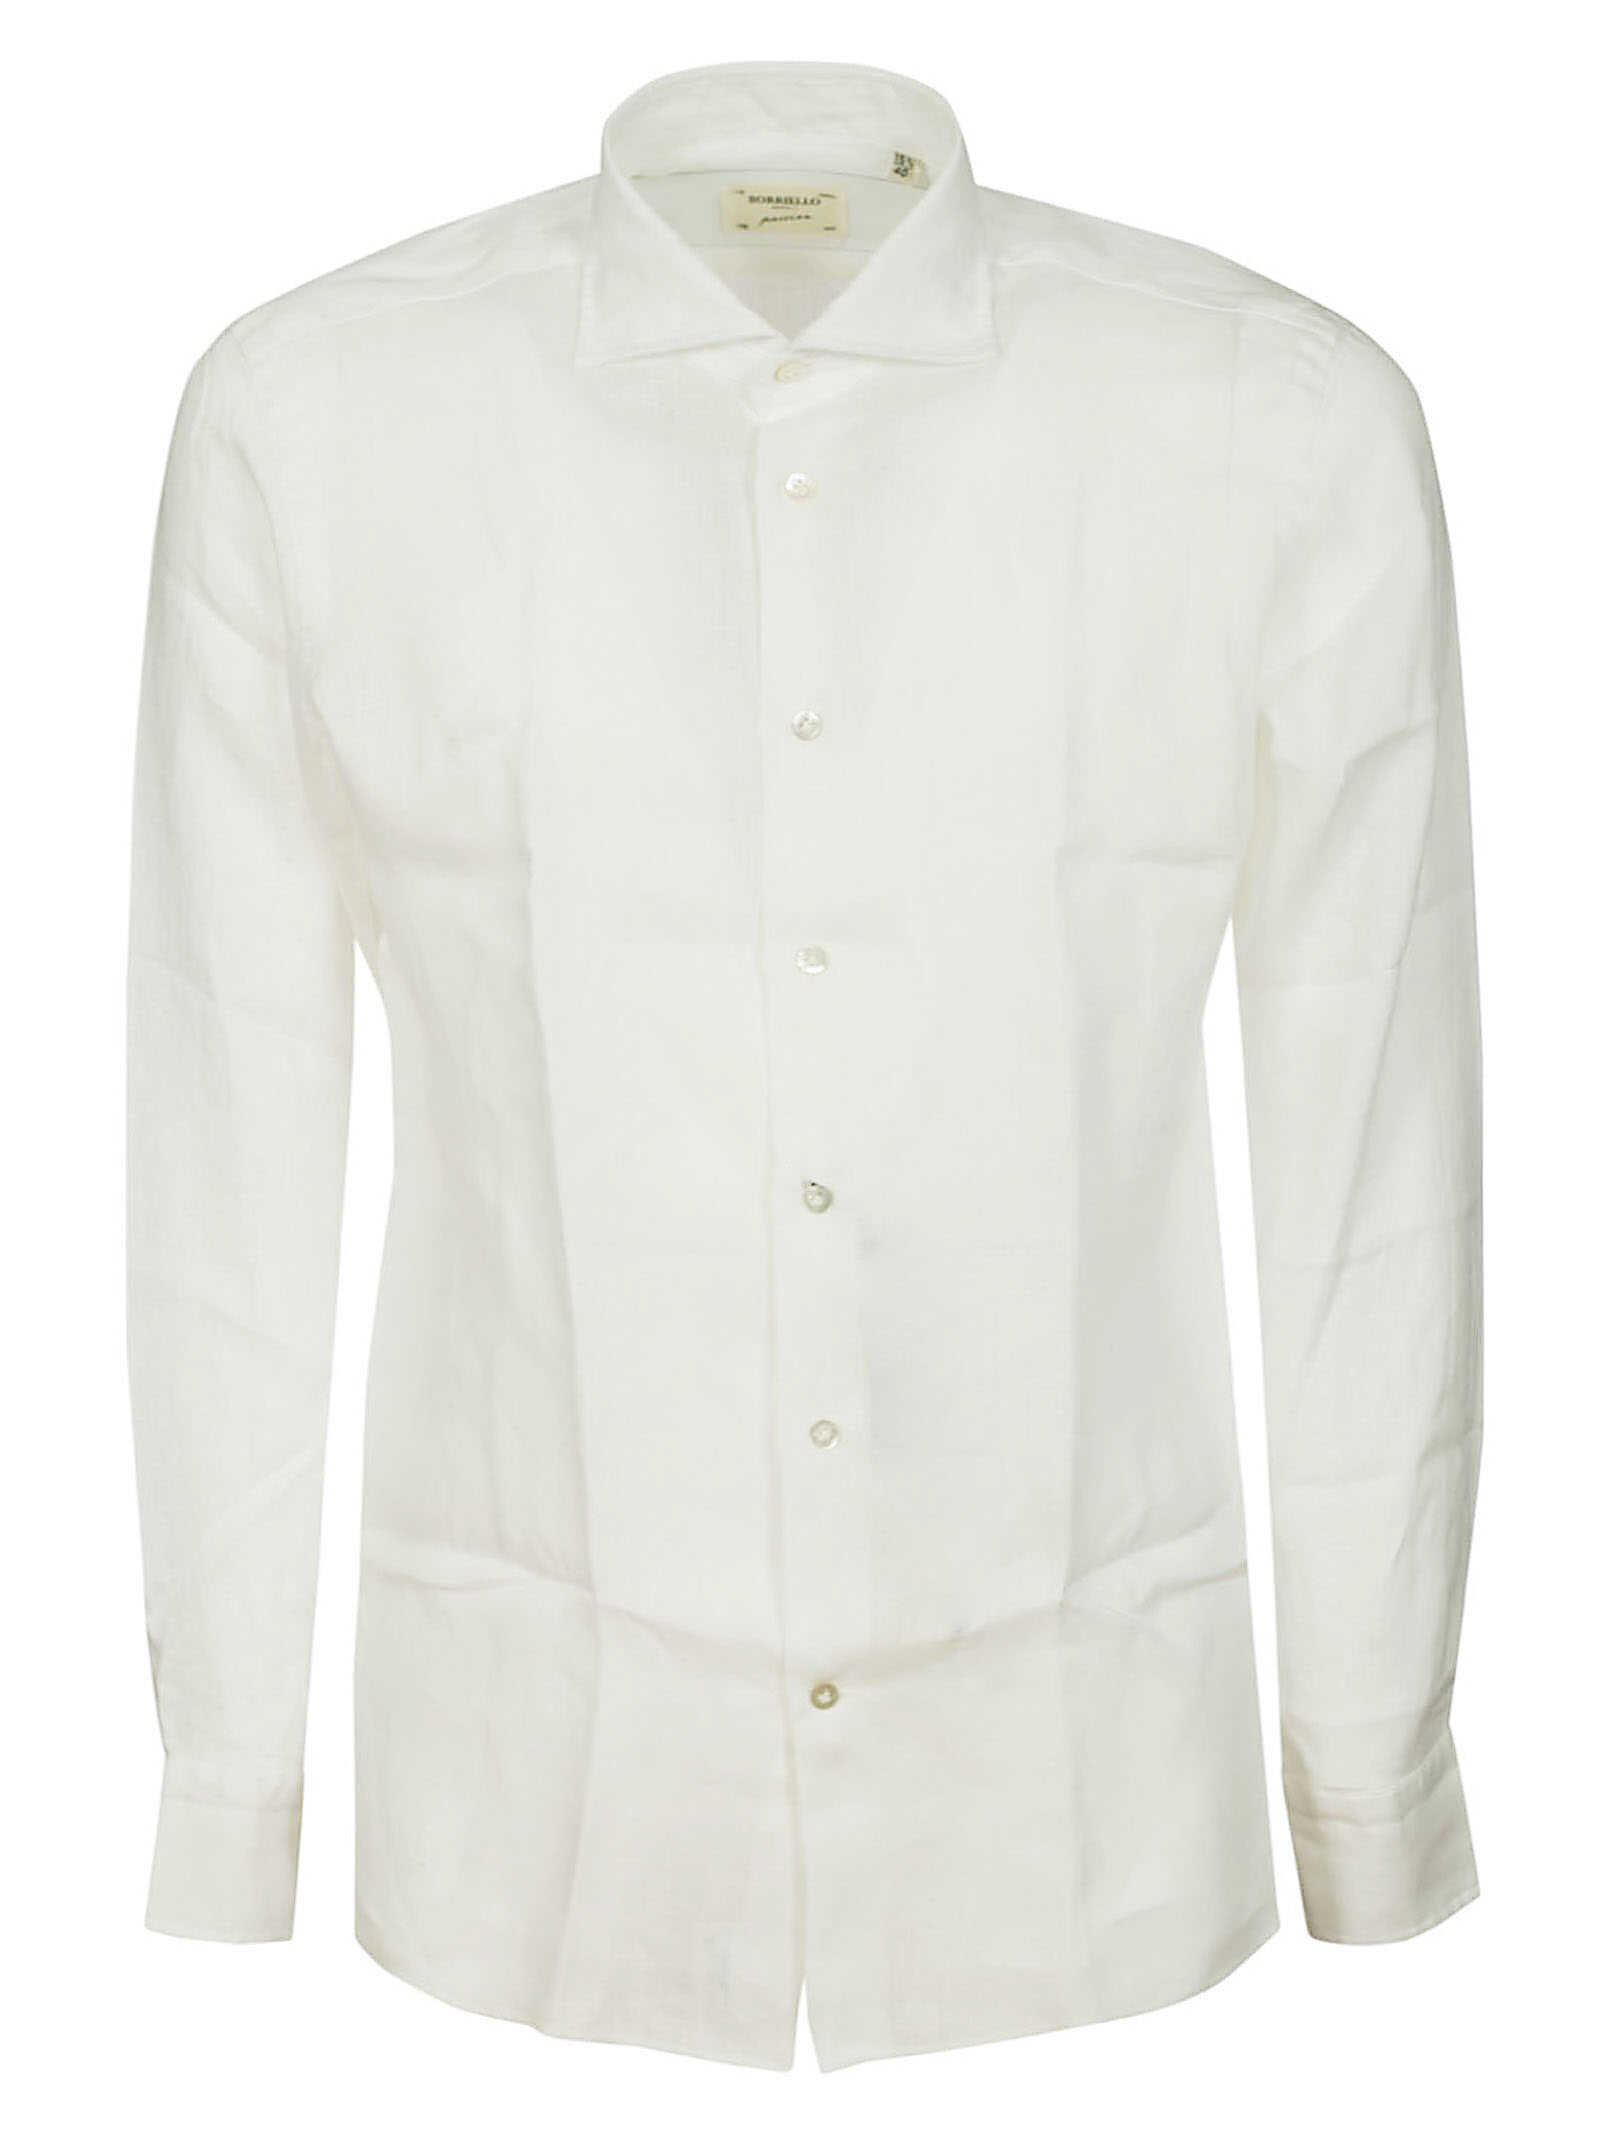 BORRIELLO Borriello Shirt 14028 1 WHITE White